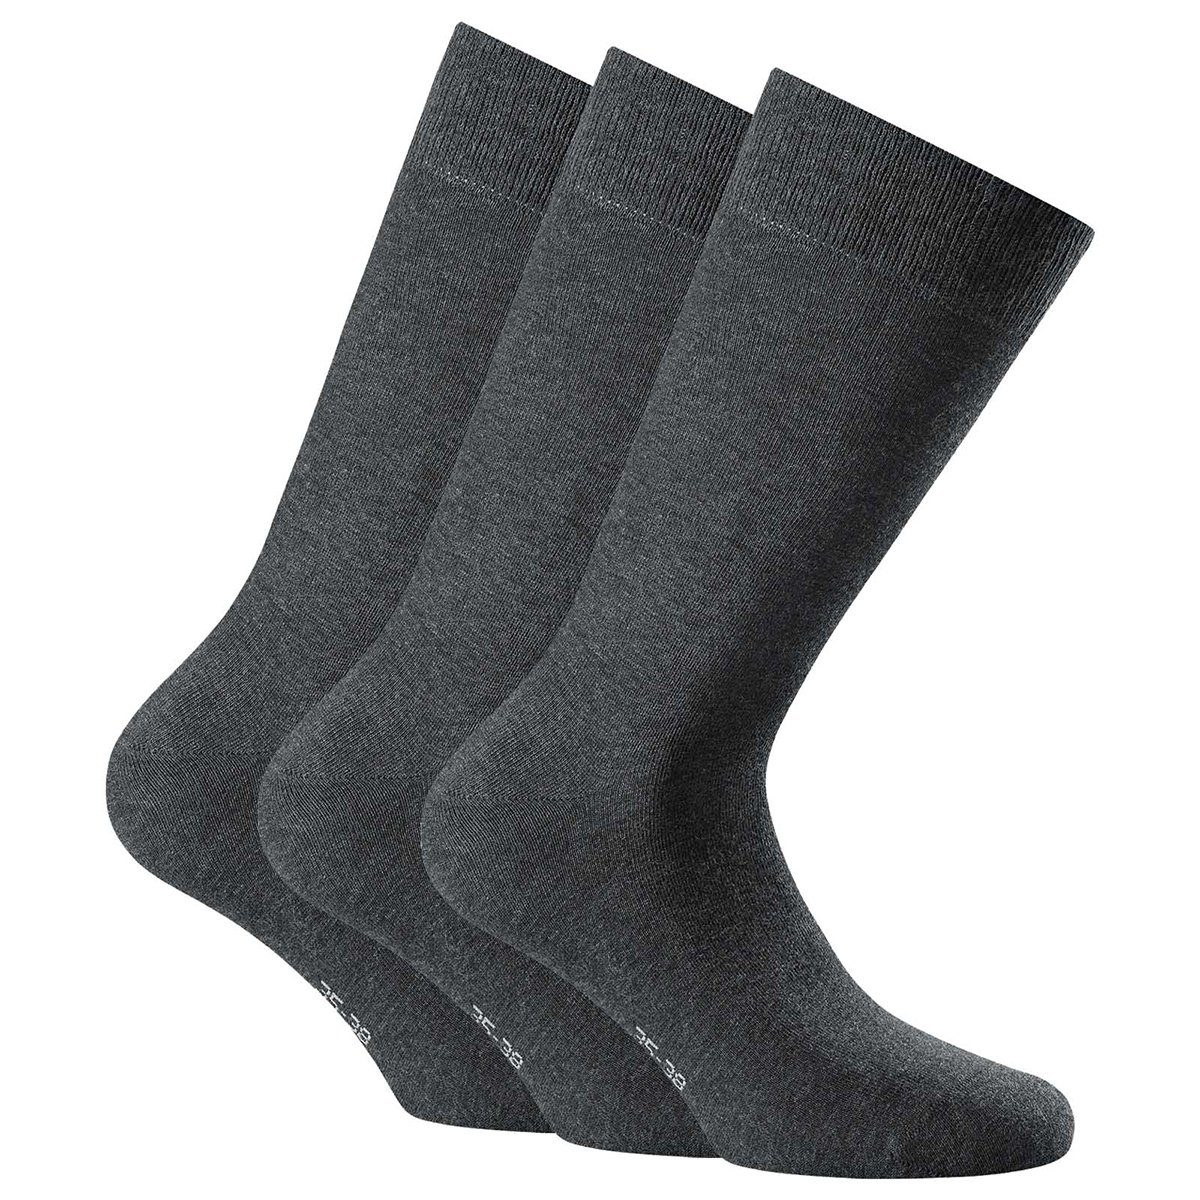 - Cotton Socks Unisex 3er Kurzsocken II, Anthrazit Socken, Pack Rohner Kurzsocken